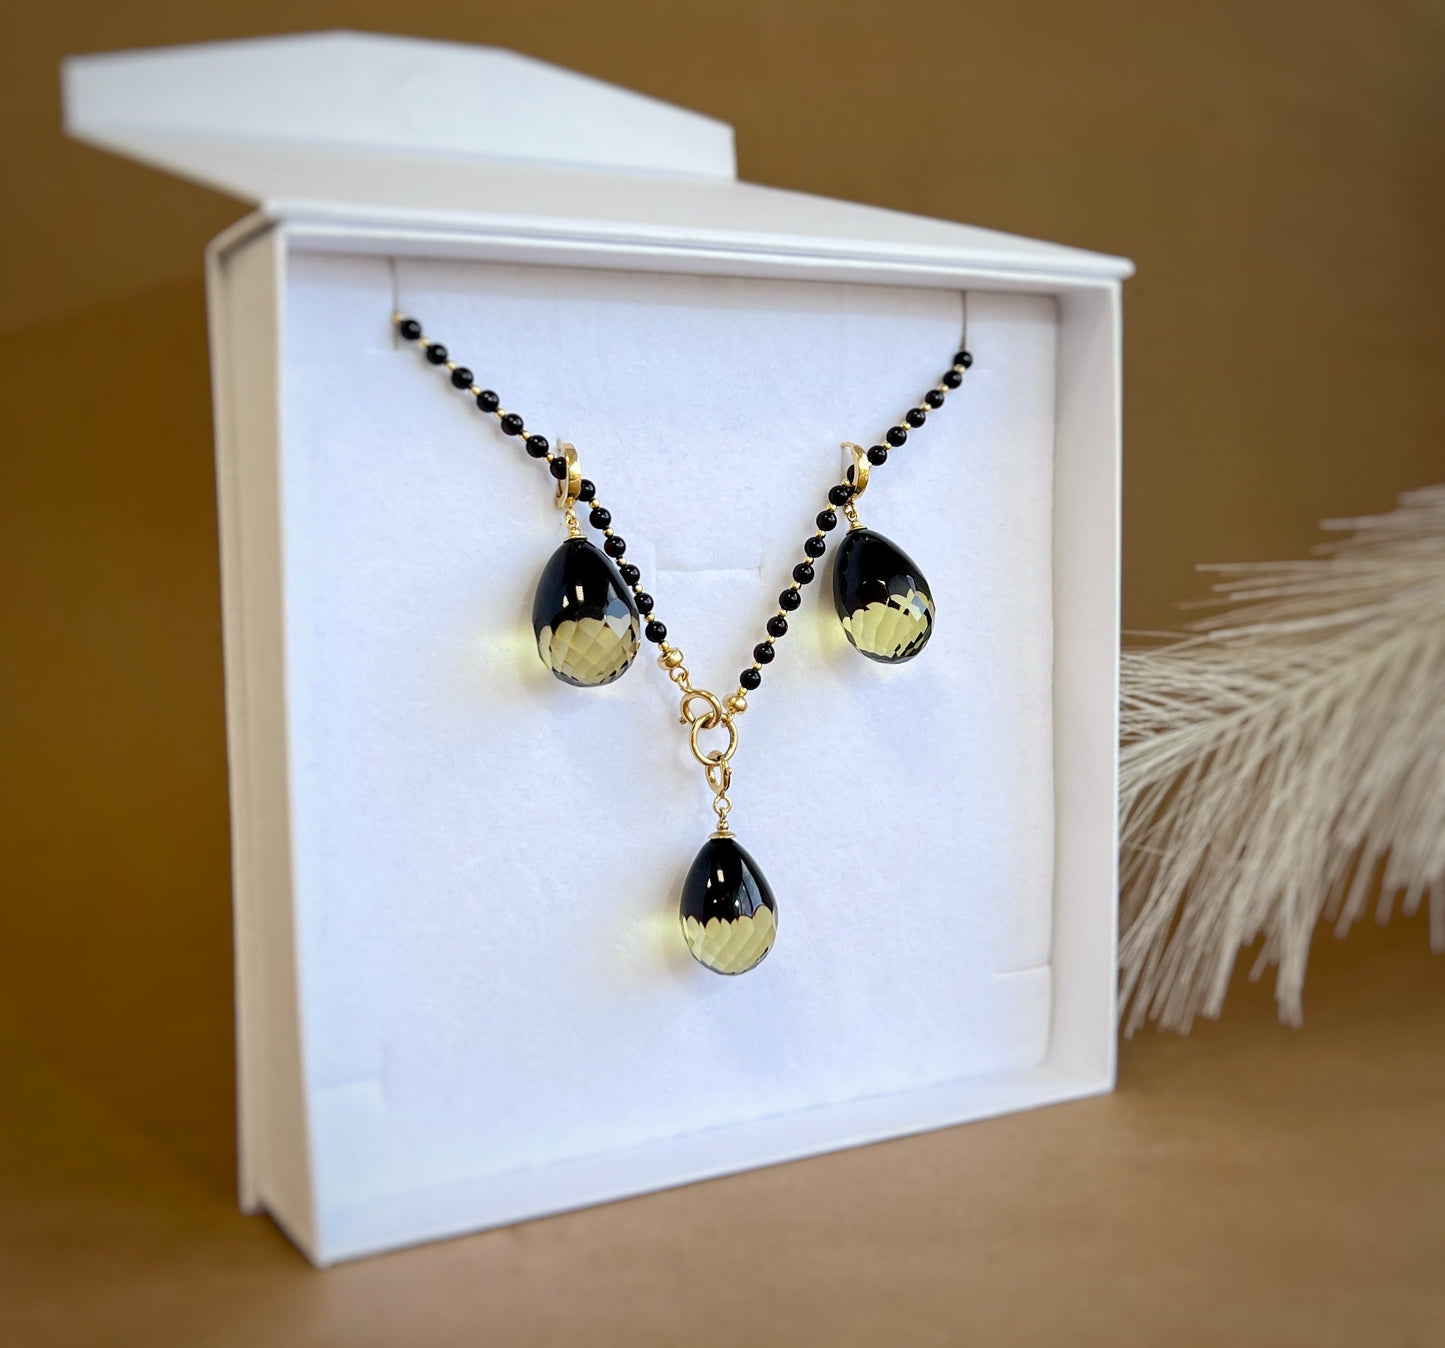 Amber necklace "Bellum gold"